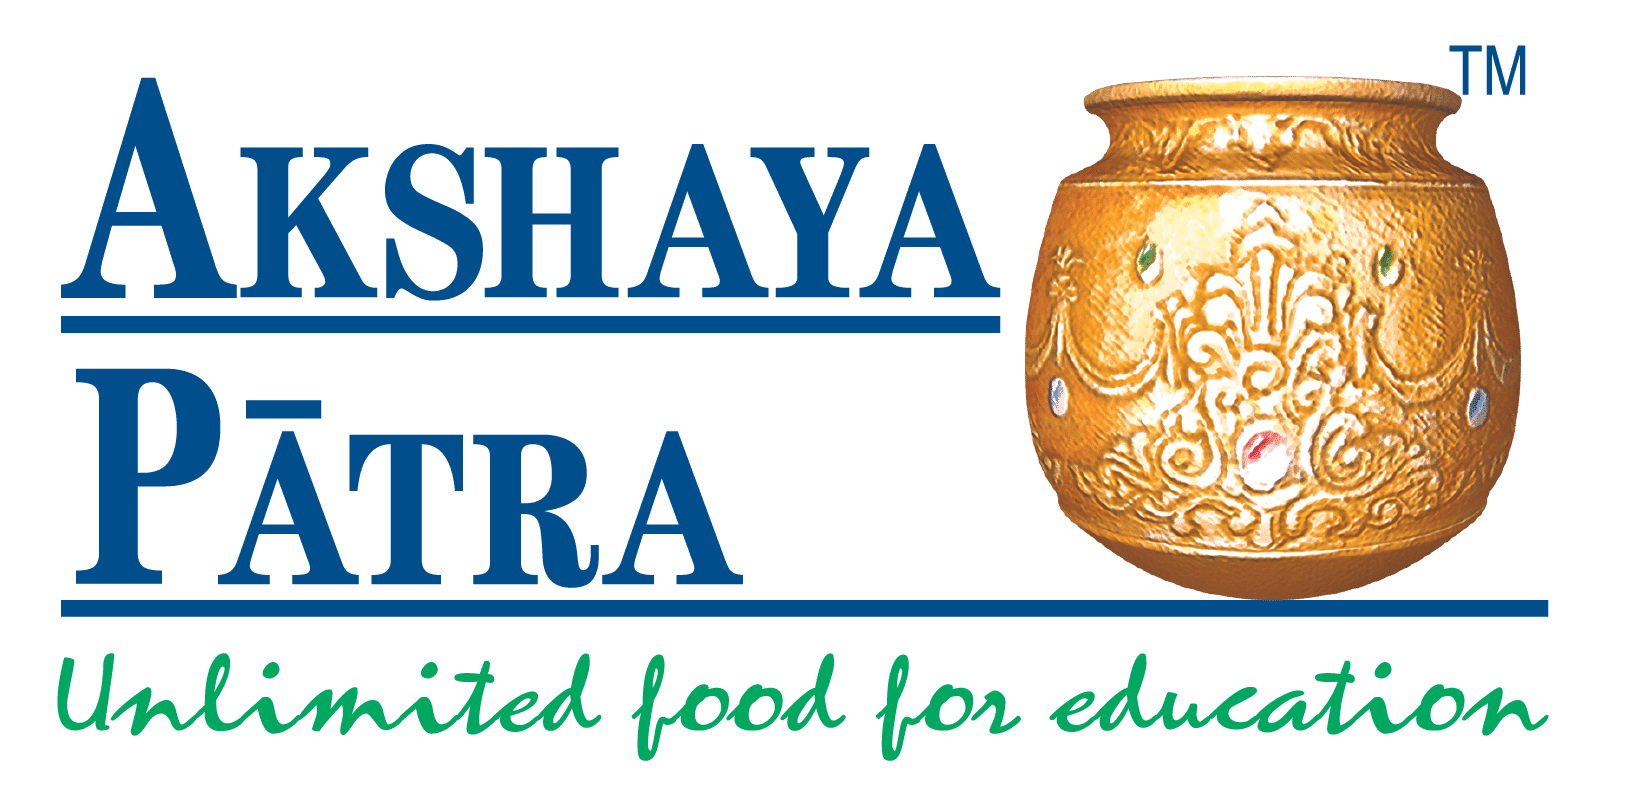 Partnership for Progress: The Akshaya Patra Foundation and Round Table India Unite for Philanthropy